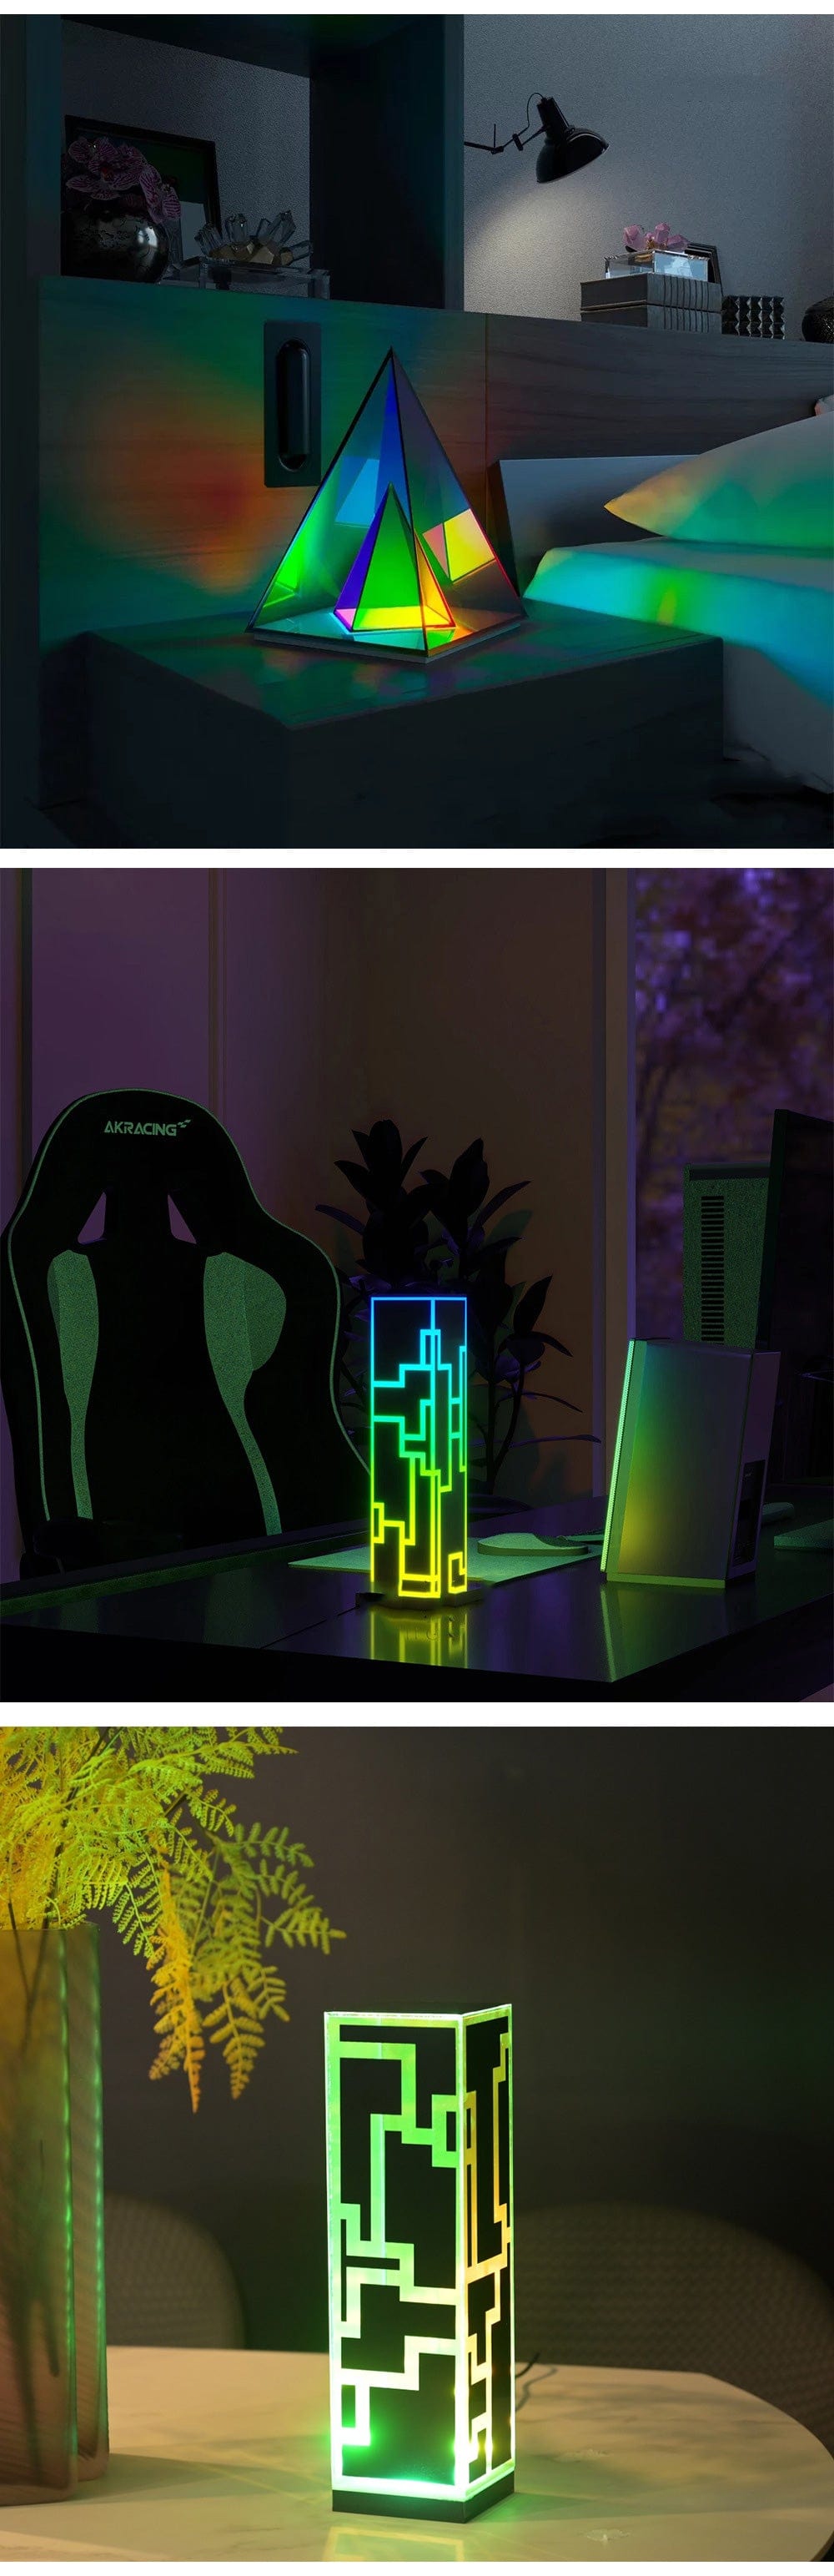 HomeBound Essentials 3D Cube Acrylic Atmospheric Standing Night Light